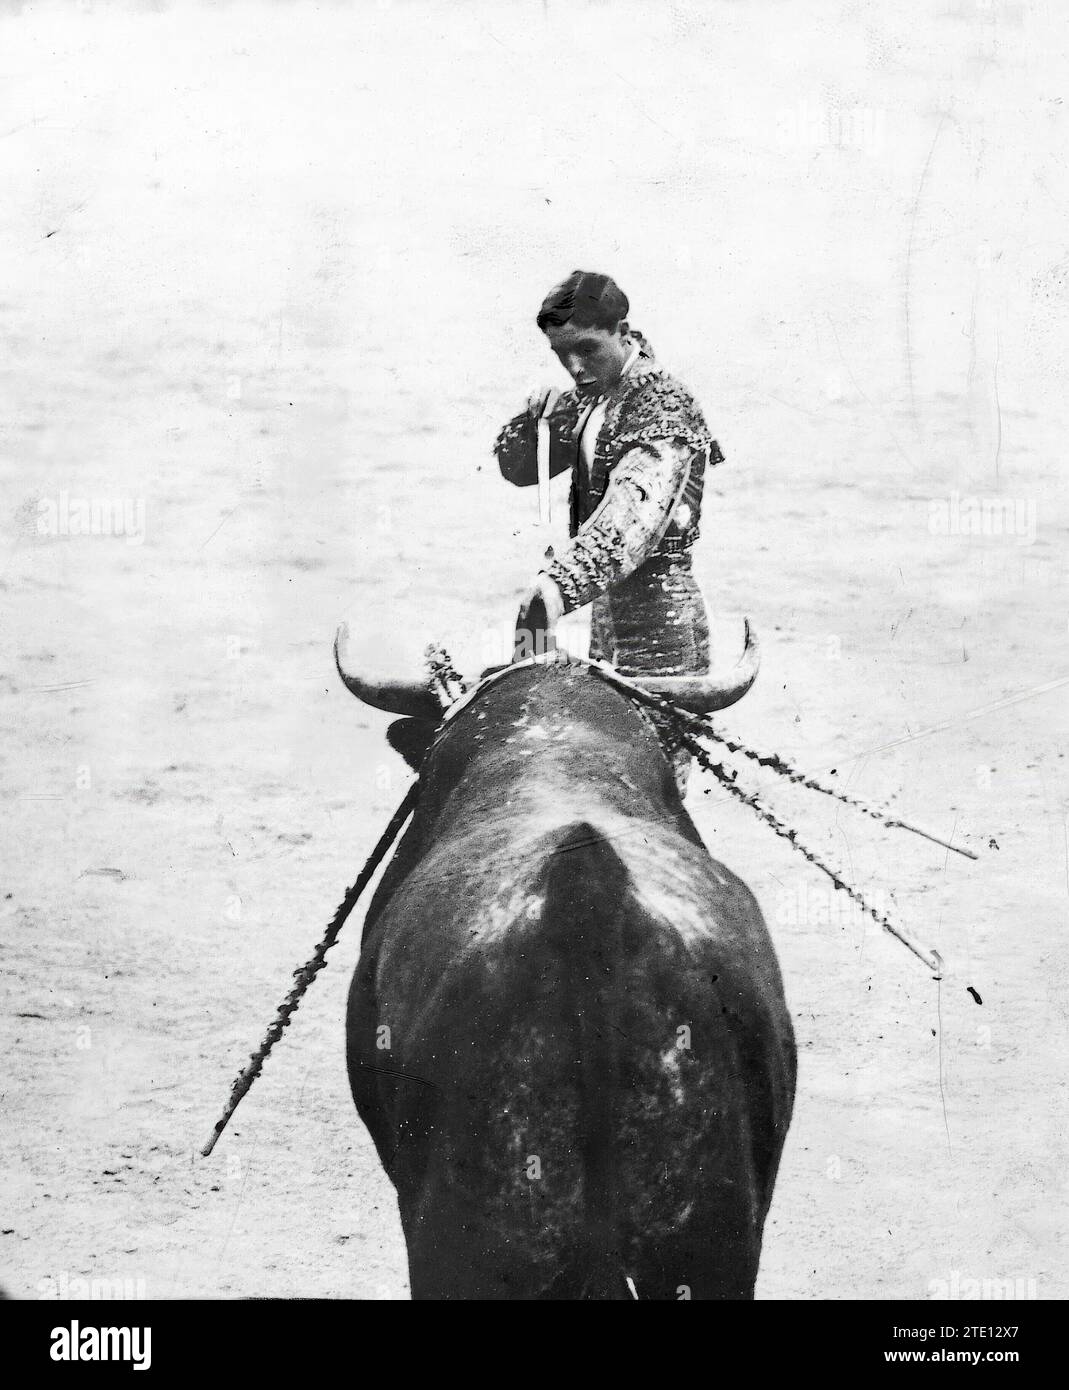 06/12/1913. Madrid, day 12. Francisco posada entering to wound one of his bulls. Credit: Album / Archivo ABC / Julio Duque Stock Photo